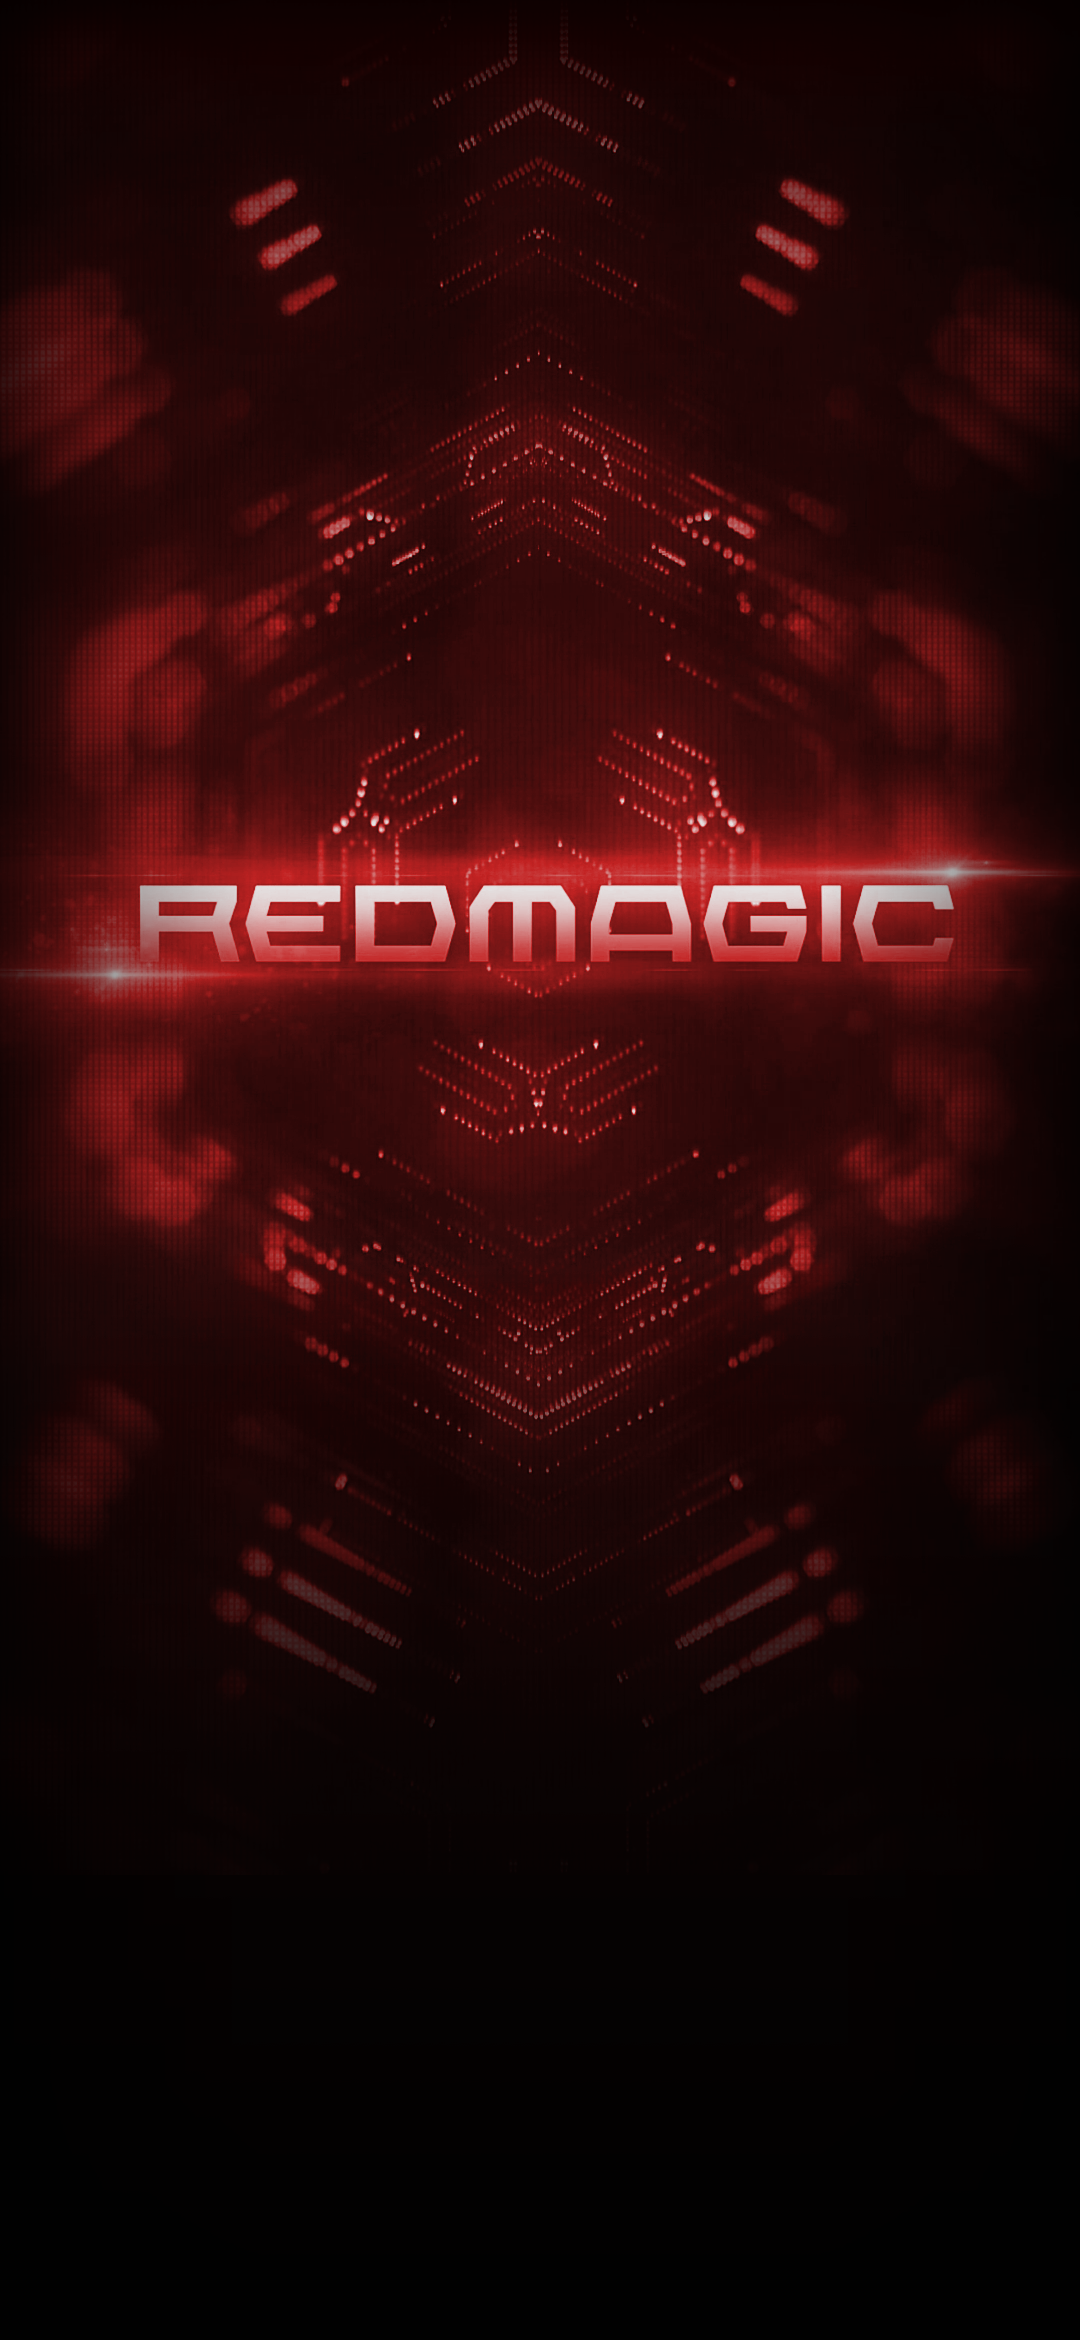 nobia red magic 3 wall androidbrick 07